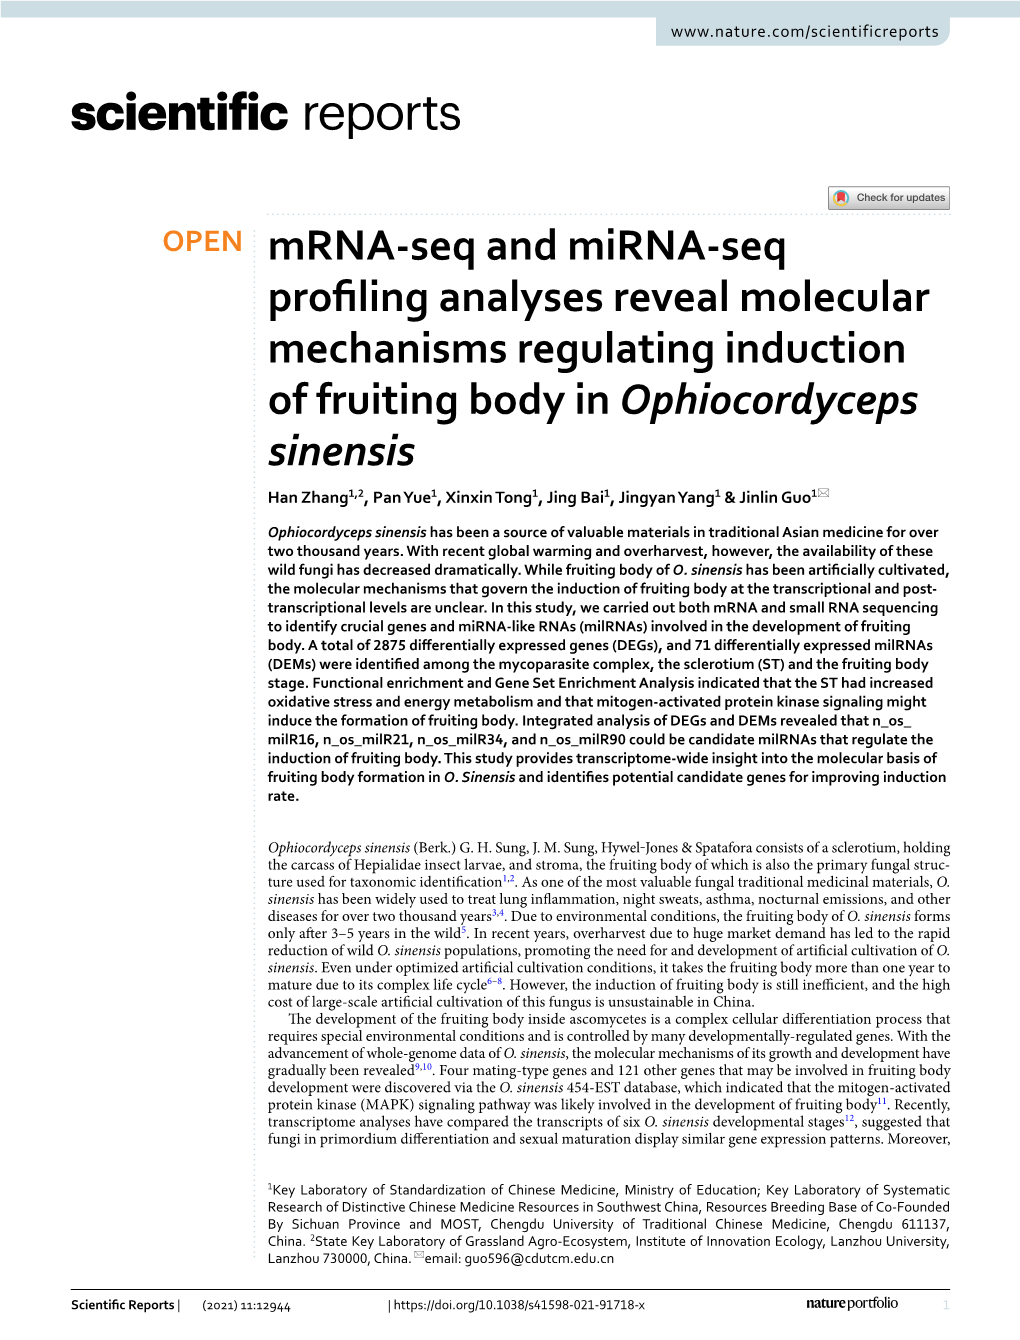 Mrna-Seq and Mirna-Seq Profiling Analyses Reveal Molecular